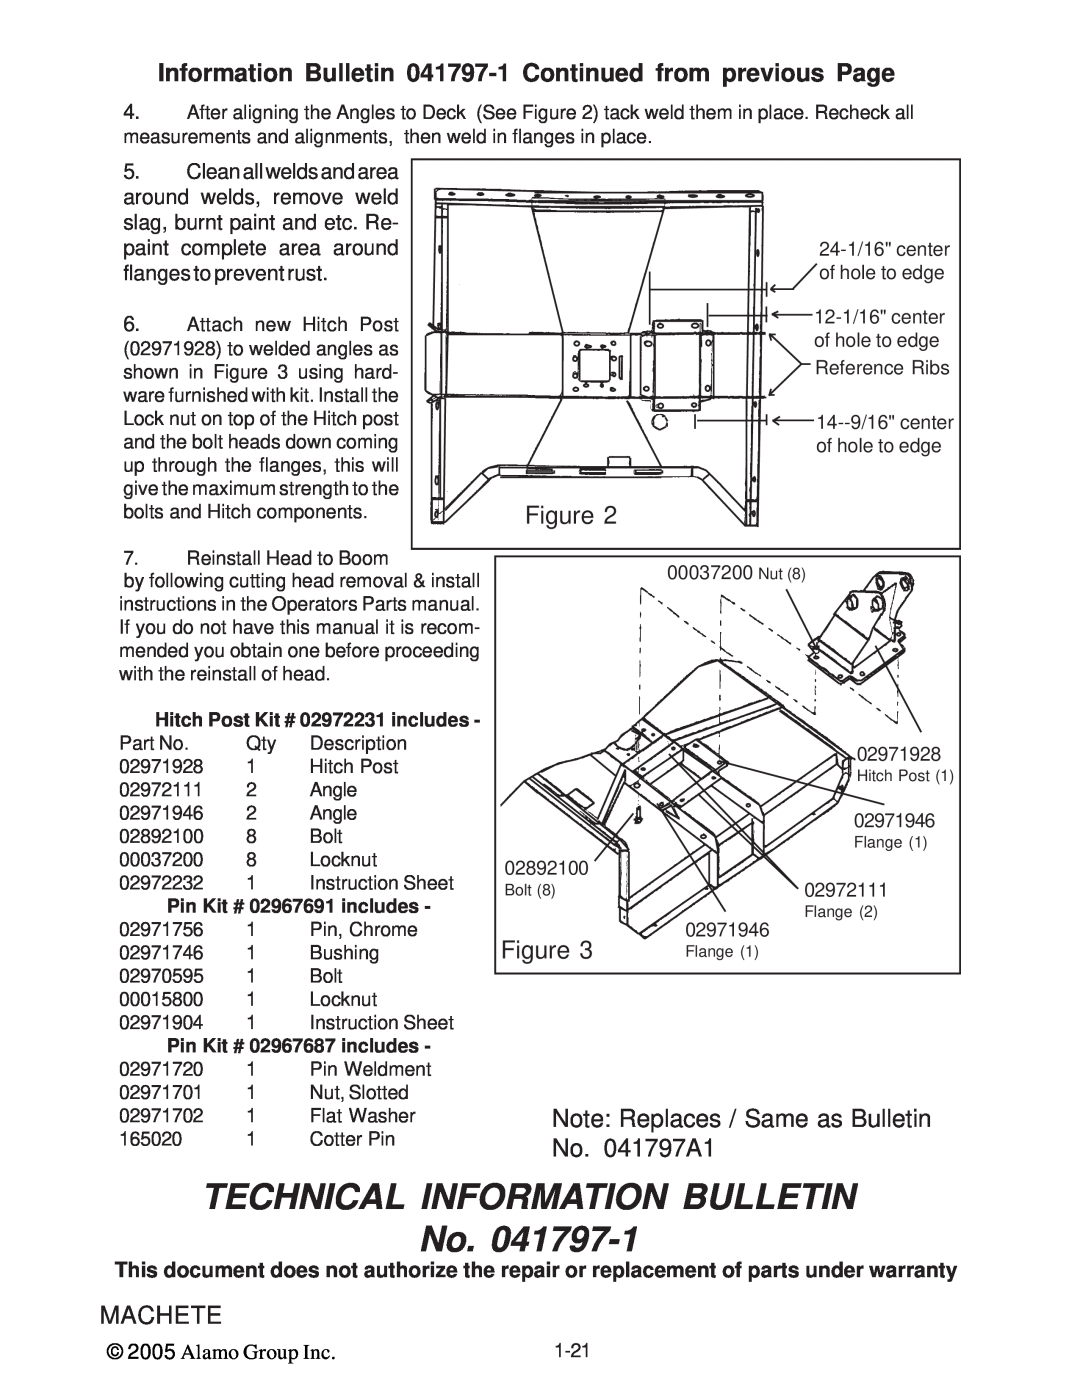 Alamo T 7740 manual Note: Replaces / Same as Bulletin, No. 041797A1, Cleanallweldsandarea, around welds, remove weld, paint 